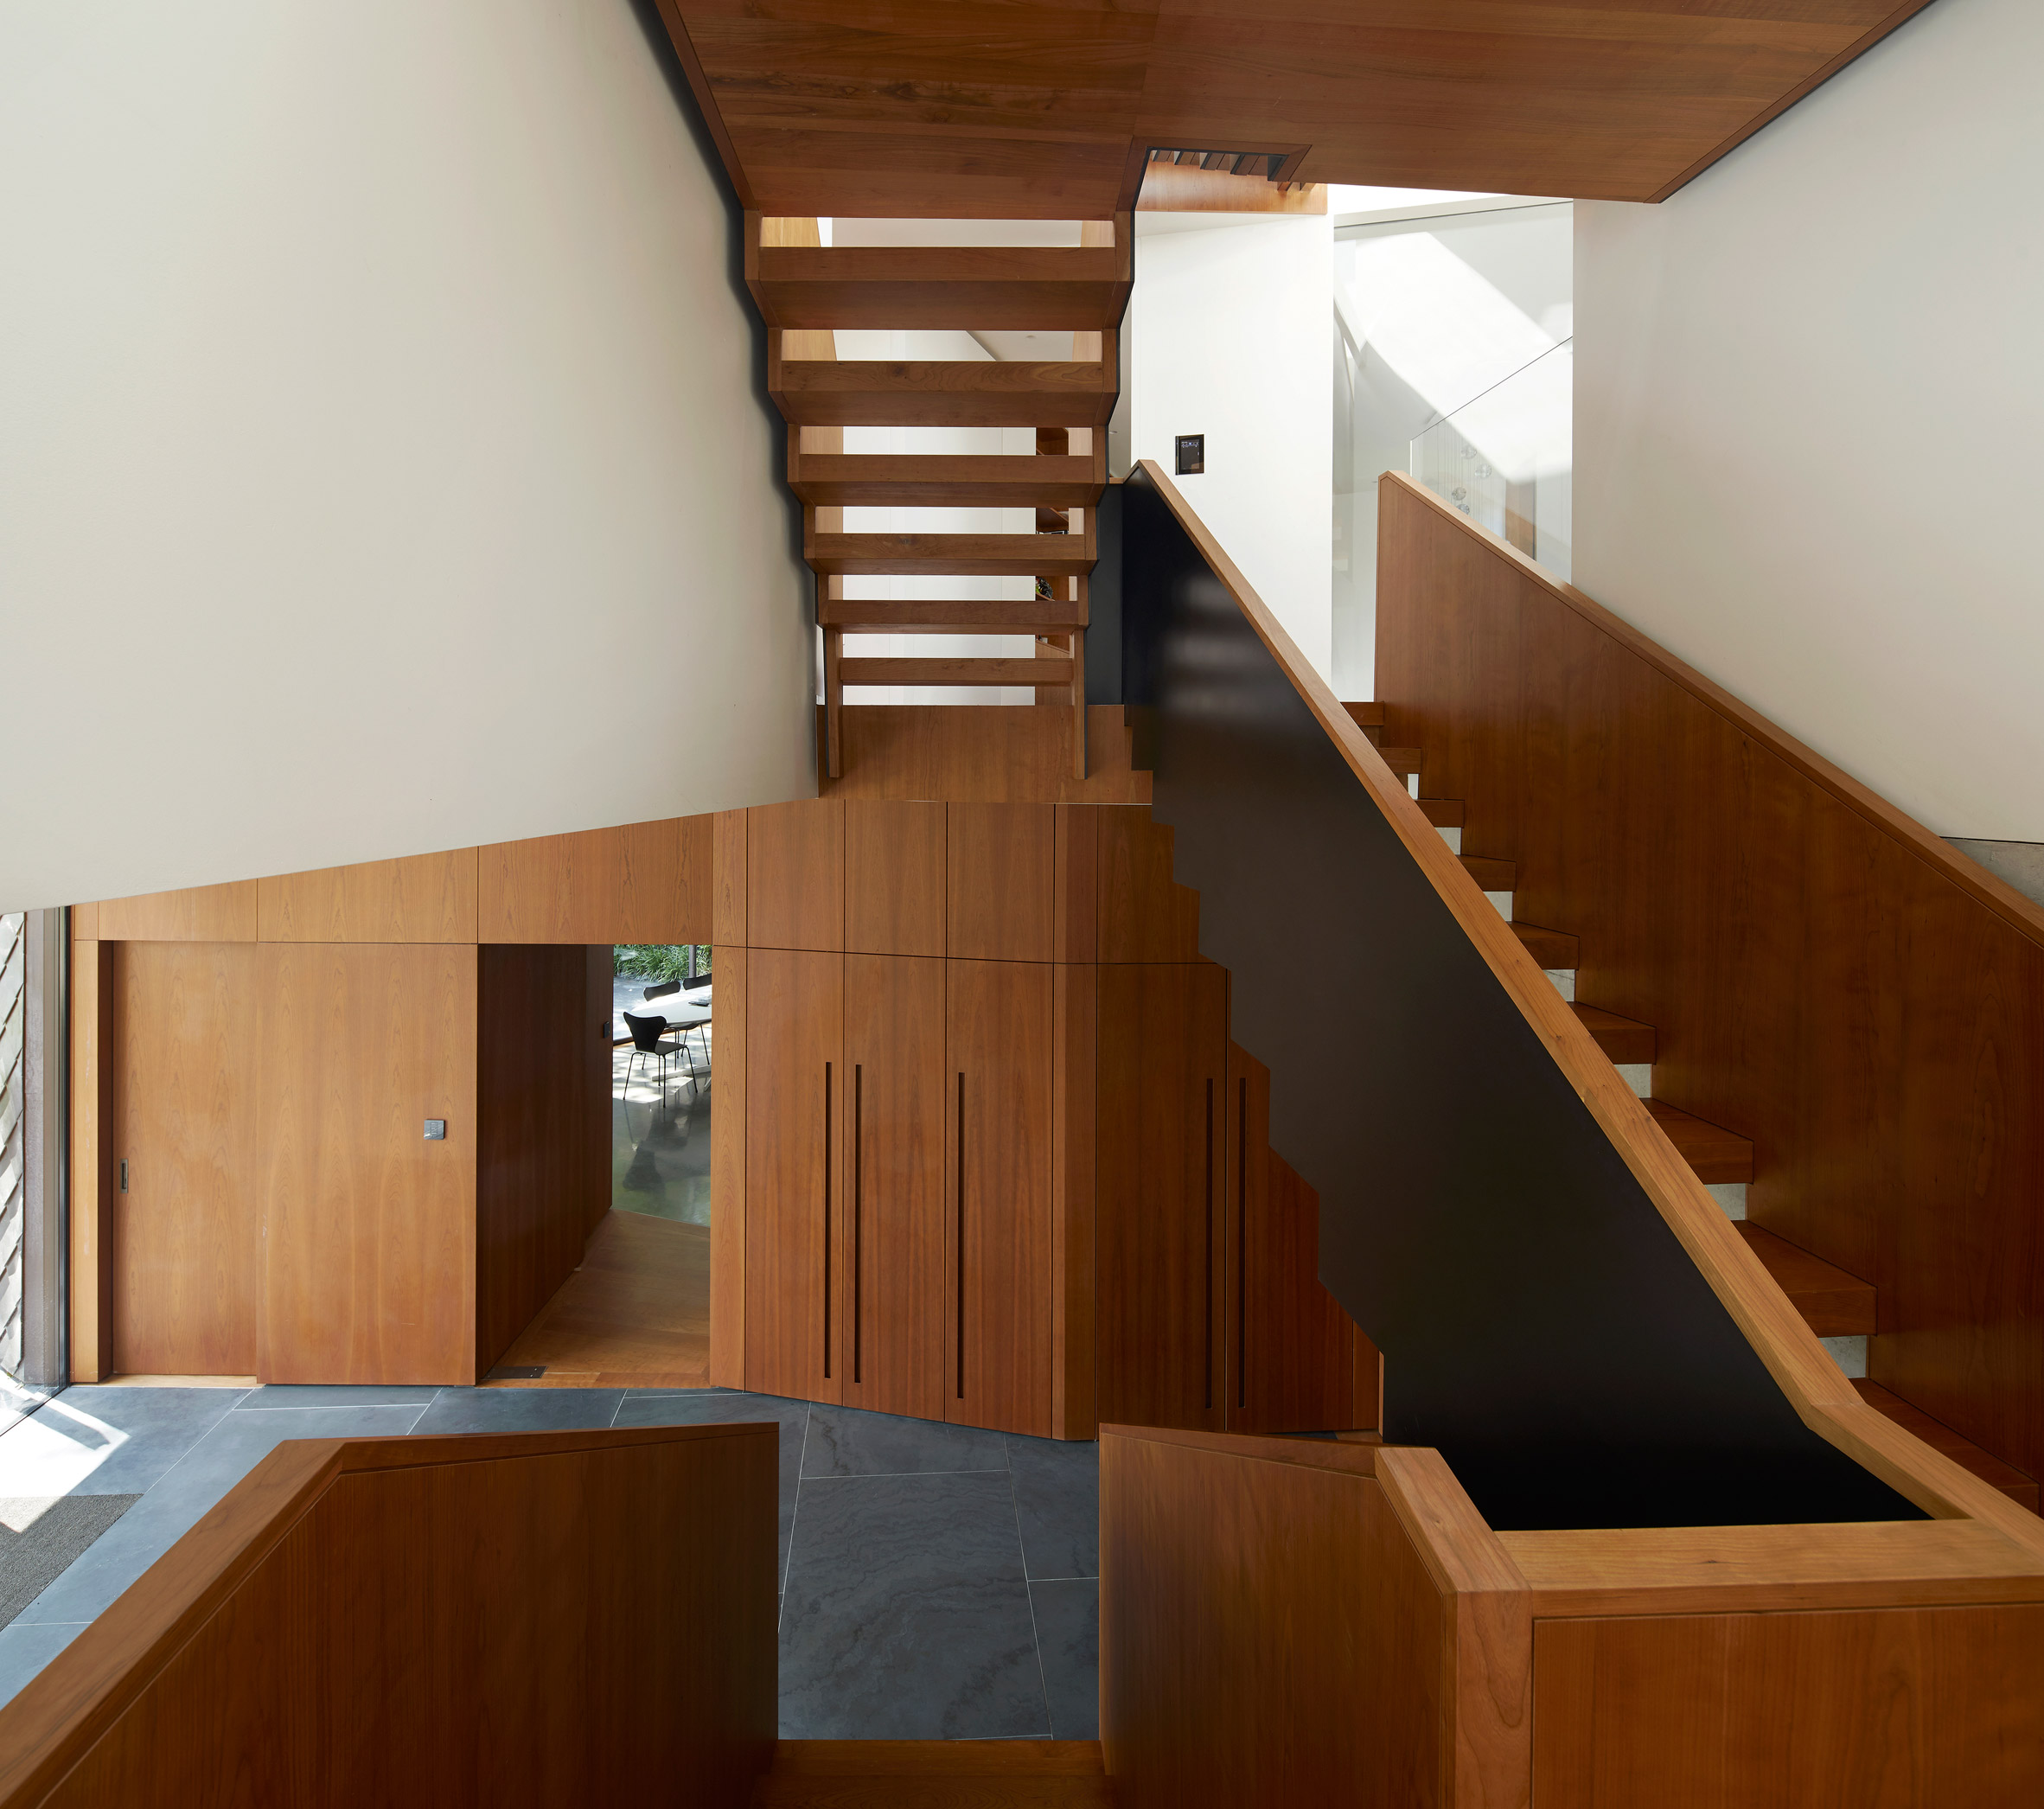 Angular wooden staircase